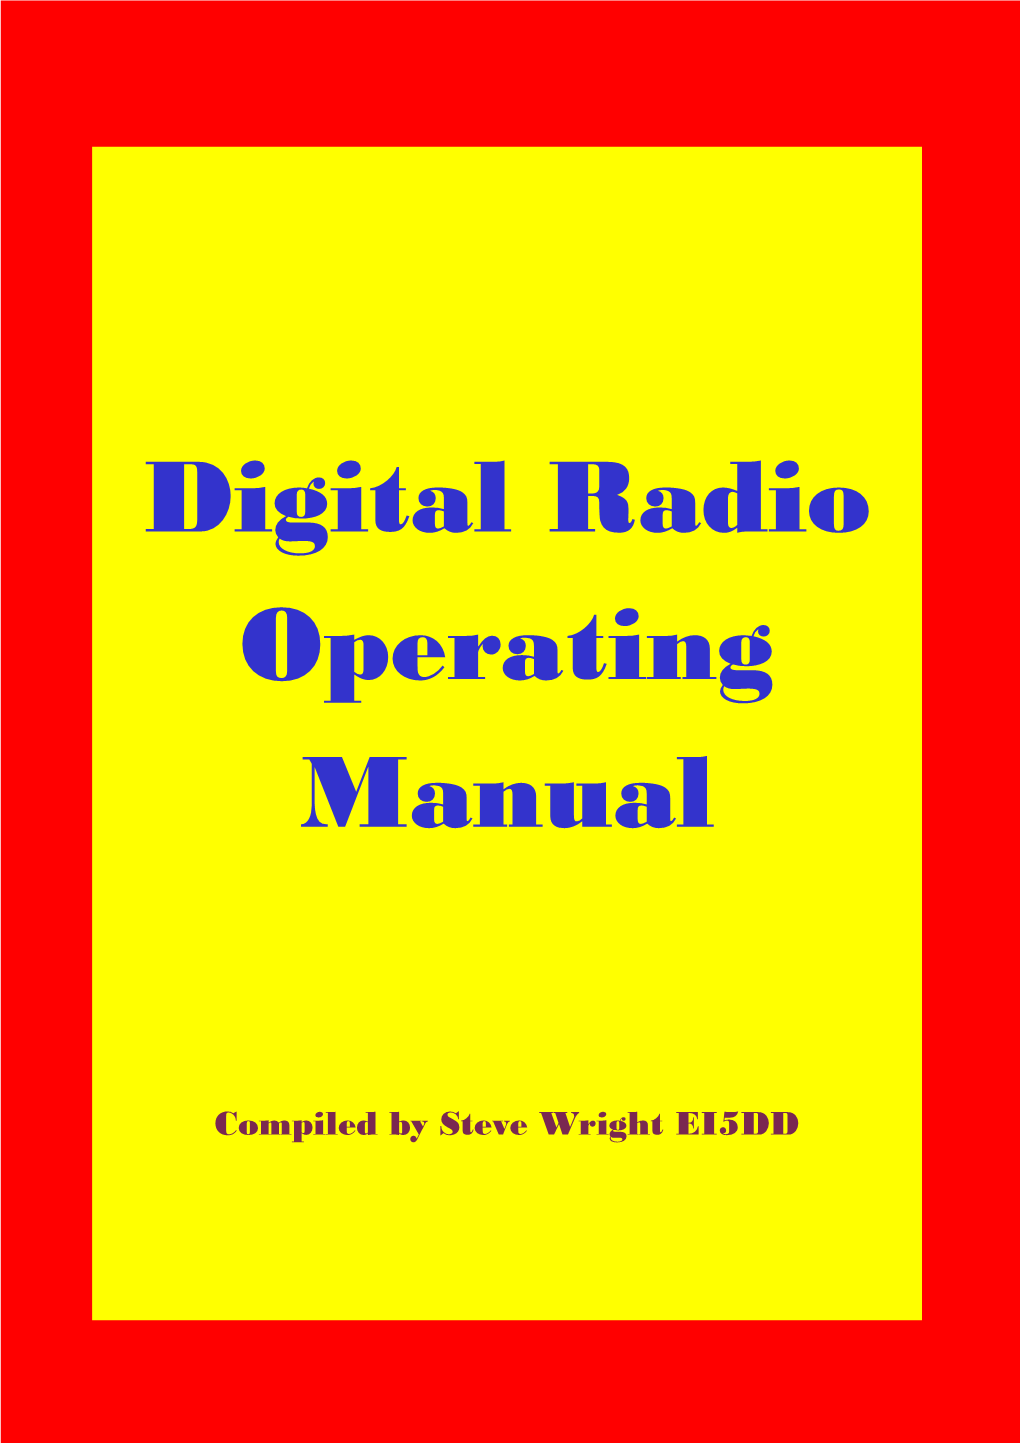 Digital Radio Operating Manual